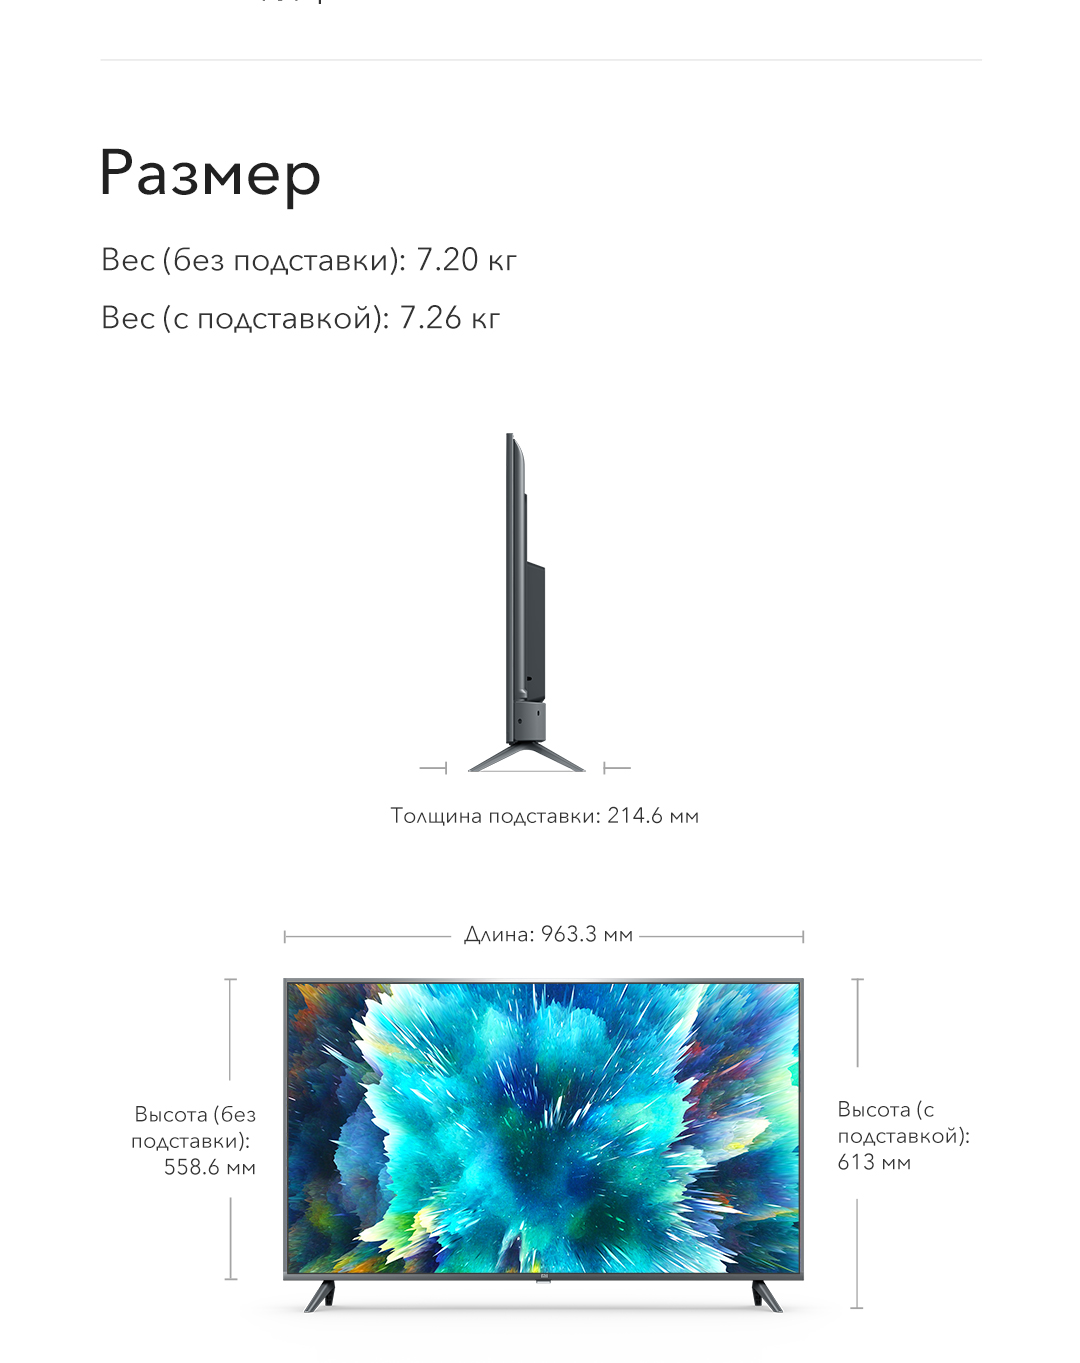 Телевизоры xiaomi размеры. Телевизор Xiaomi mi TV 4s 43 габариты. Xiaomi mi TV 4s 43 Размеры ножек. Xiaomi телевизор толщина. Размеры телевизора 43 ксиоми.